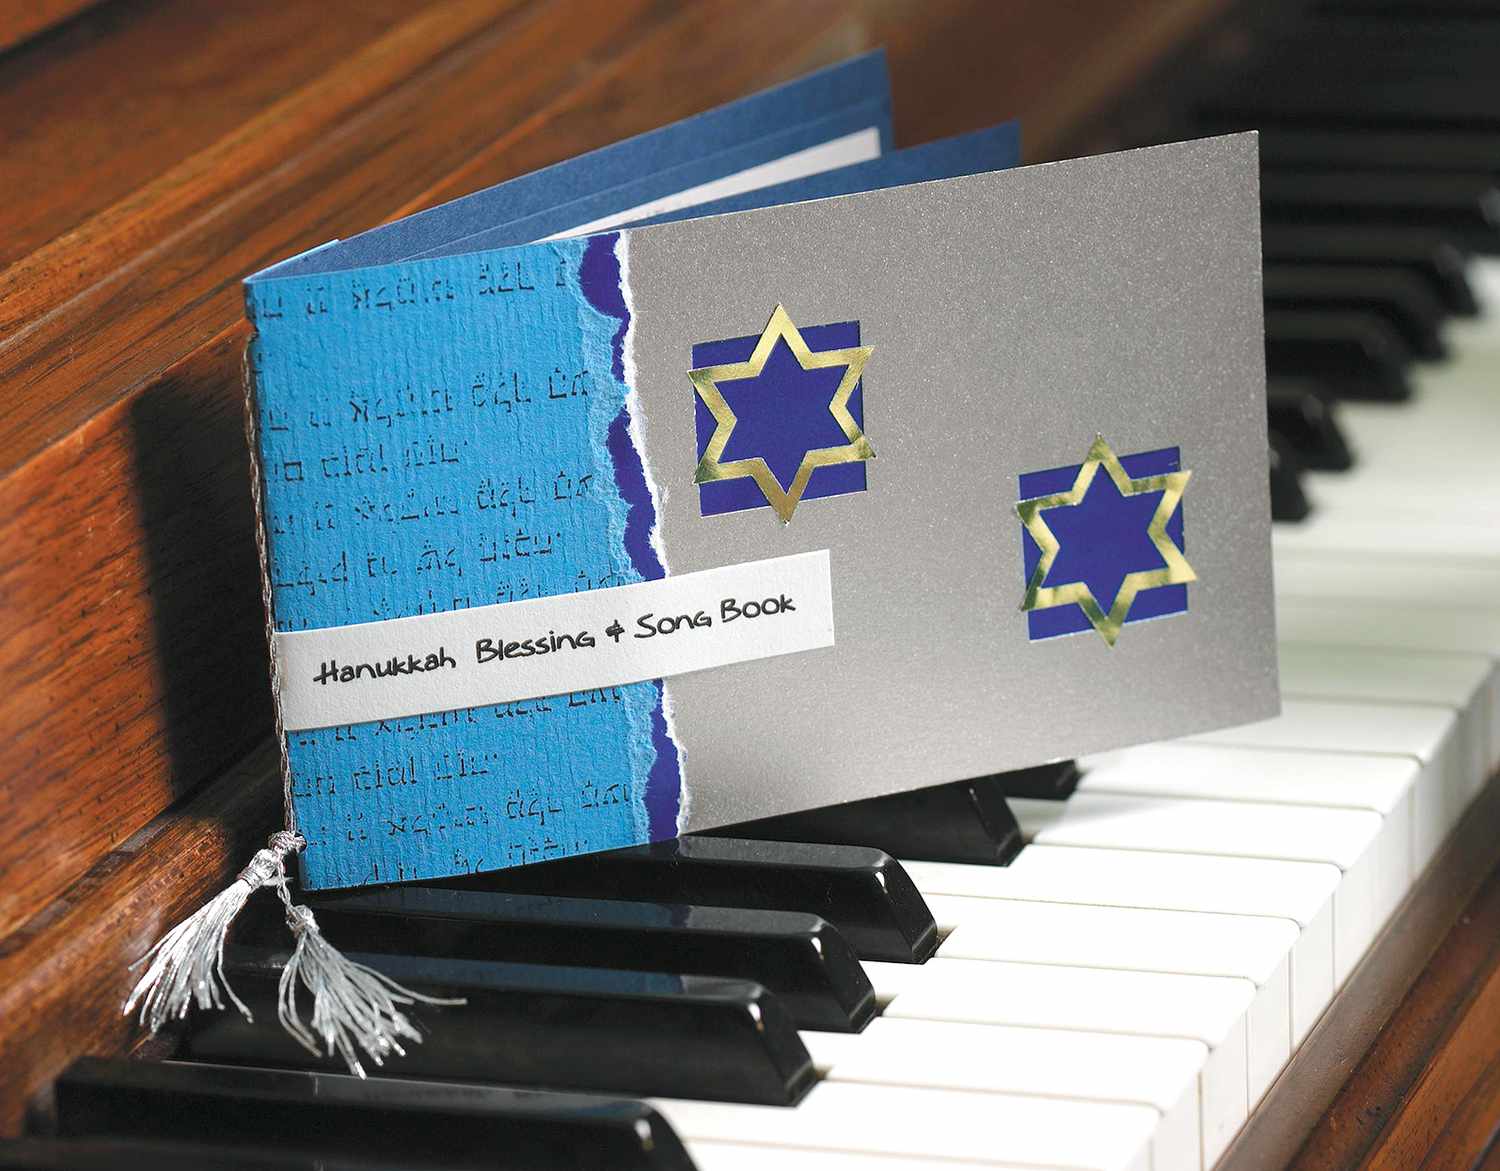 DIY Hanukkah blessing and songbook atop piano keys